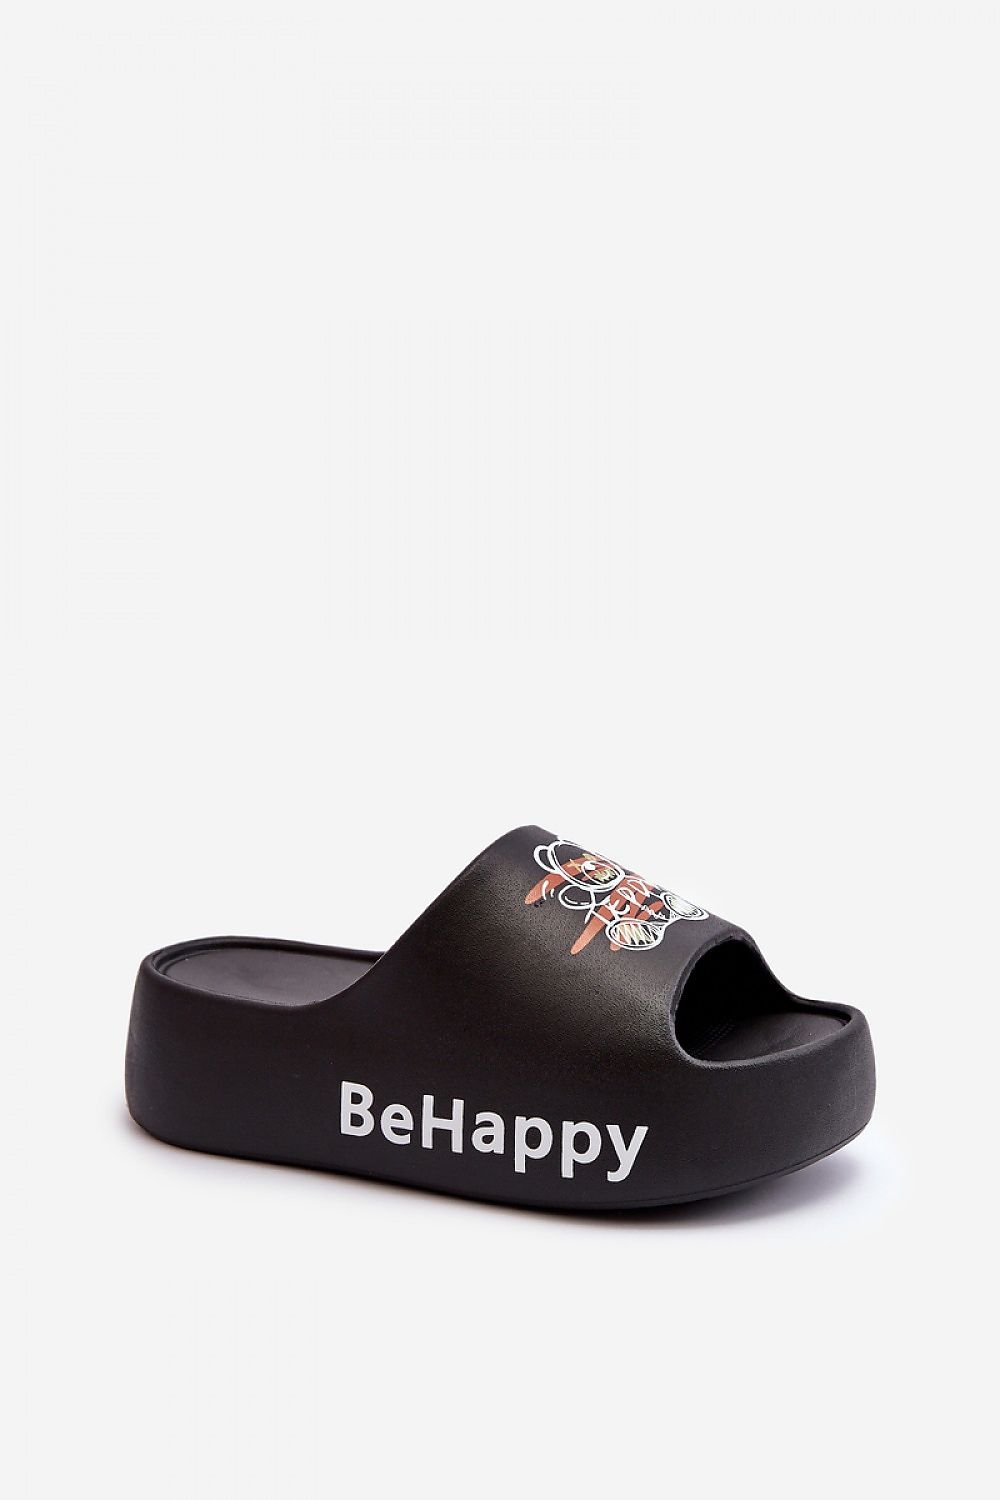 TEEK - Be Happy Bear Platform Slides SHOES TEEK MH black 6 